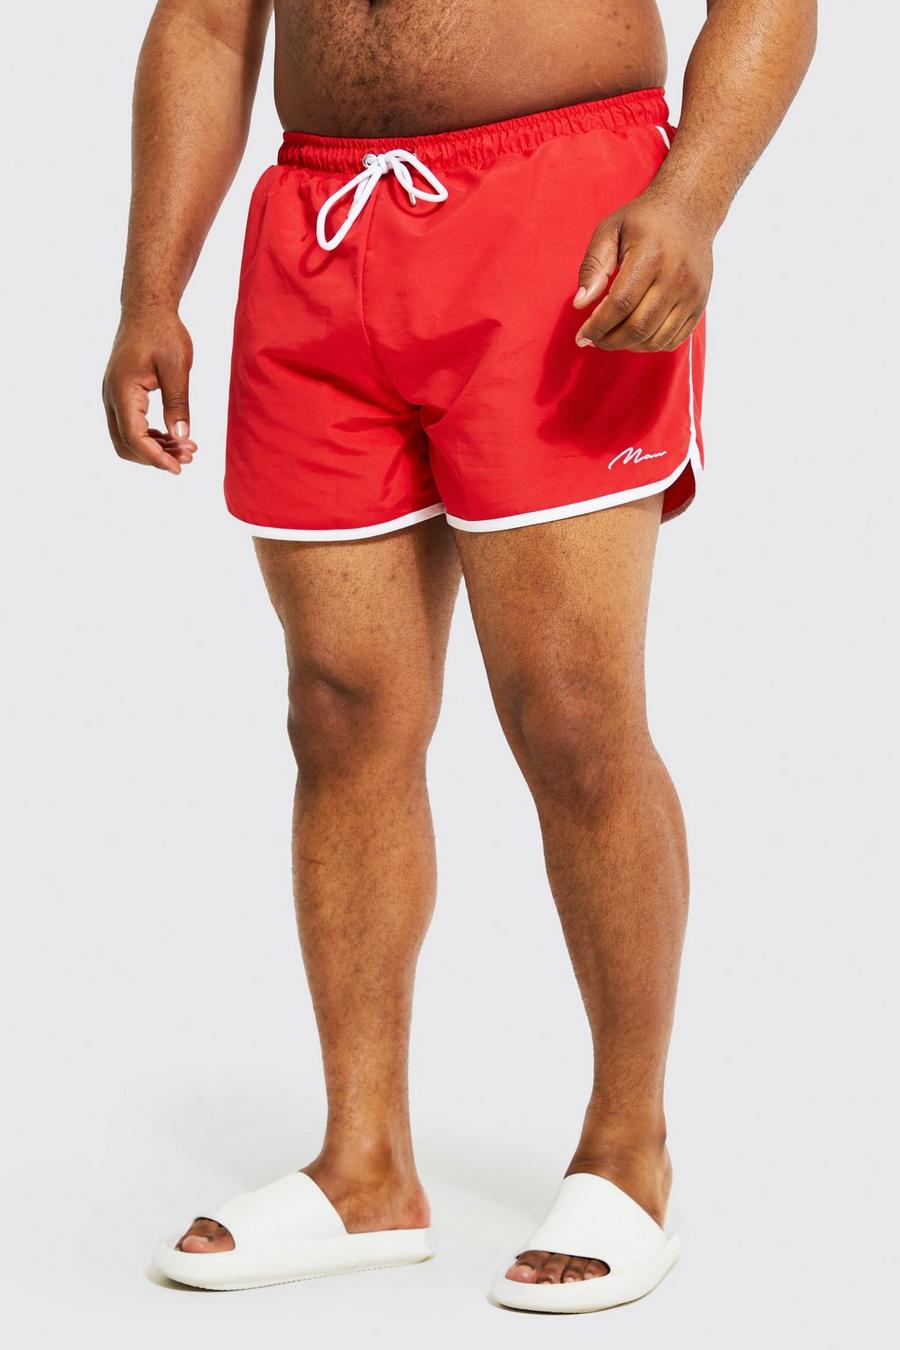 Costume a pantaloncino stile Runner Plus Size in fibre riciclate con firma Man, Red